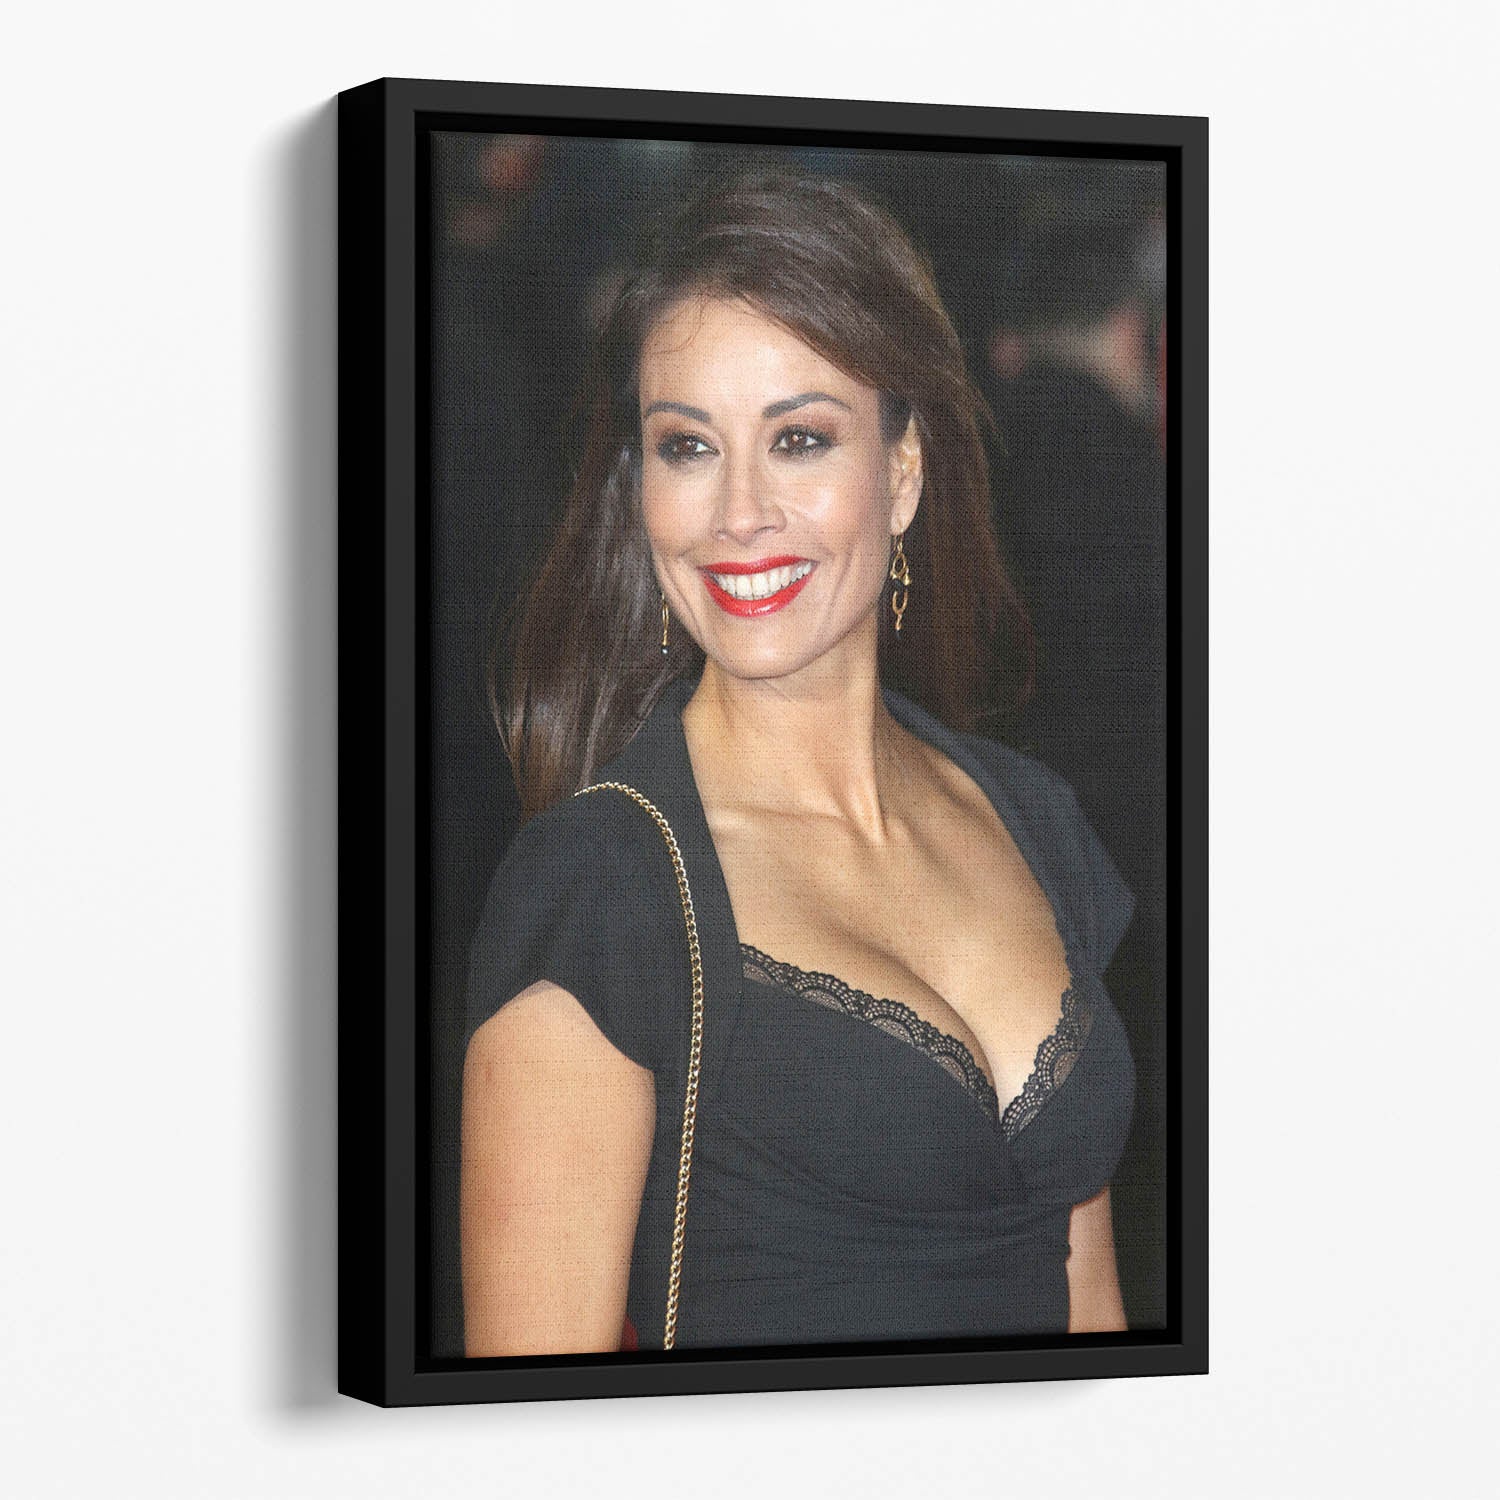 Melanie Sykes in a black dress Floating Framed Canvas